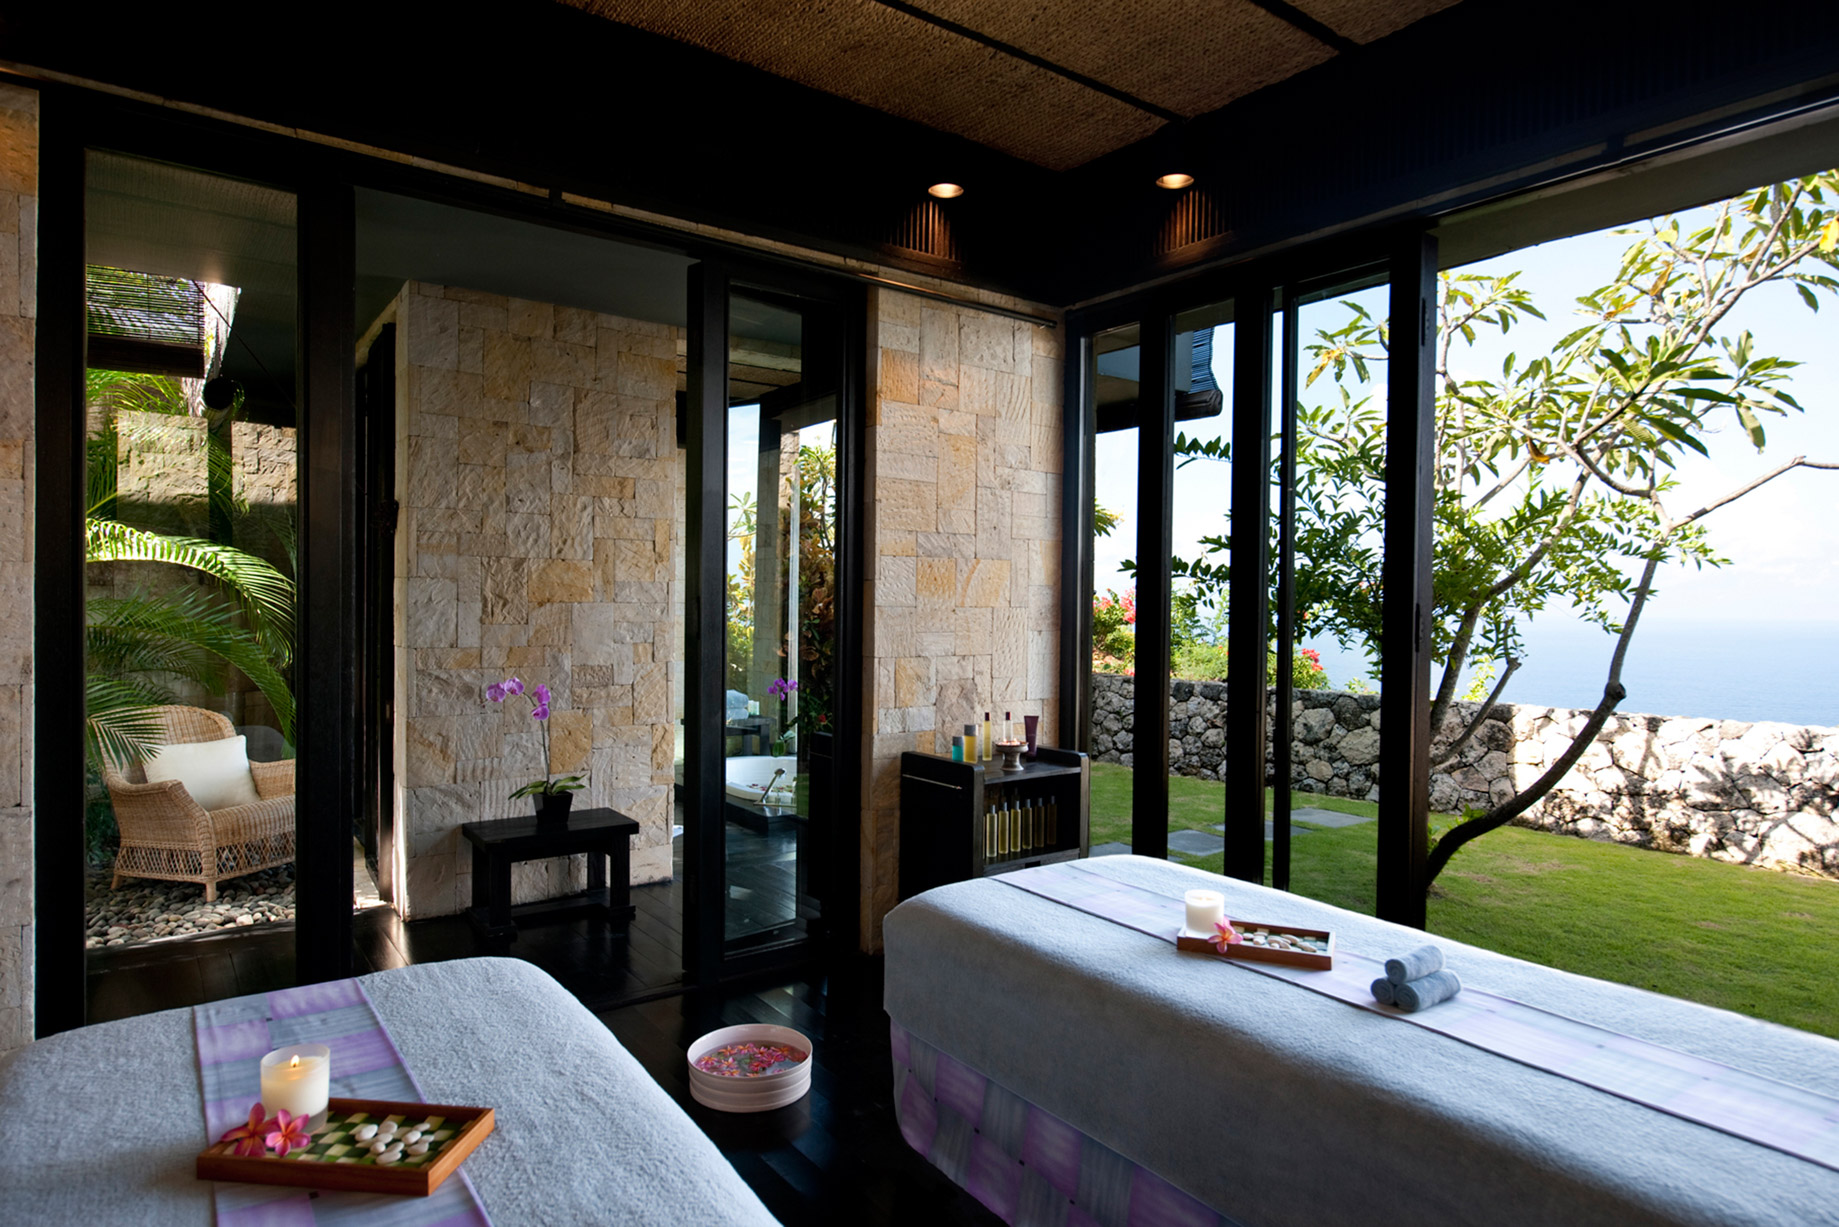 Bvlgari Resort Bali – Uluwatu, Bali, Indonesia – The Bvlgari Spa Double Treatment Room